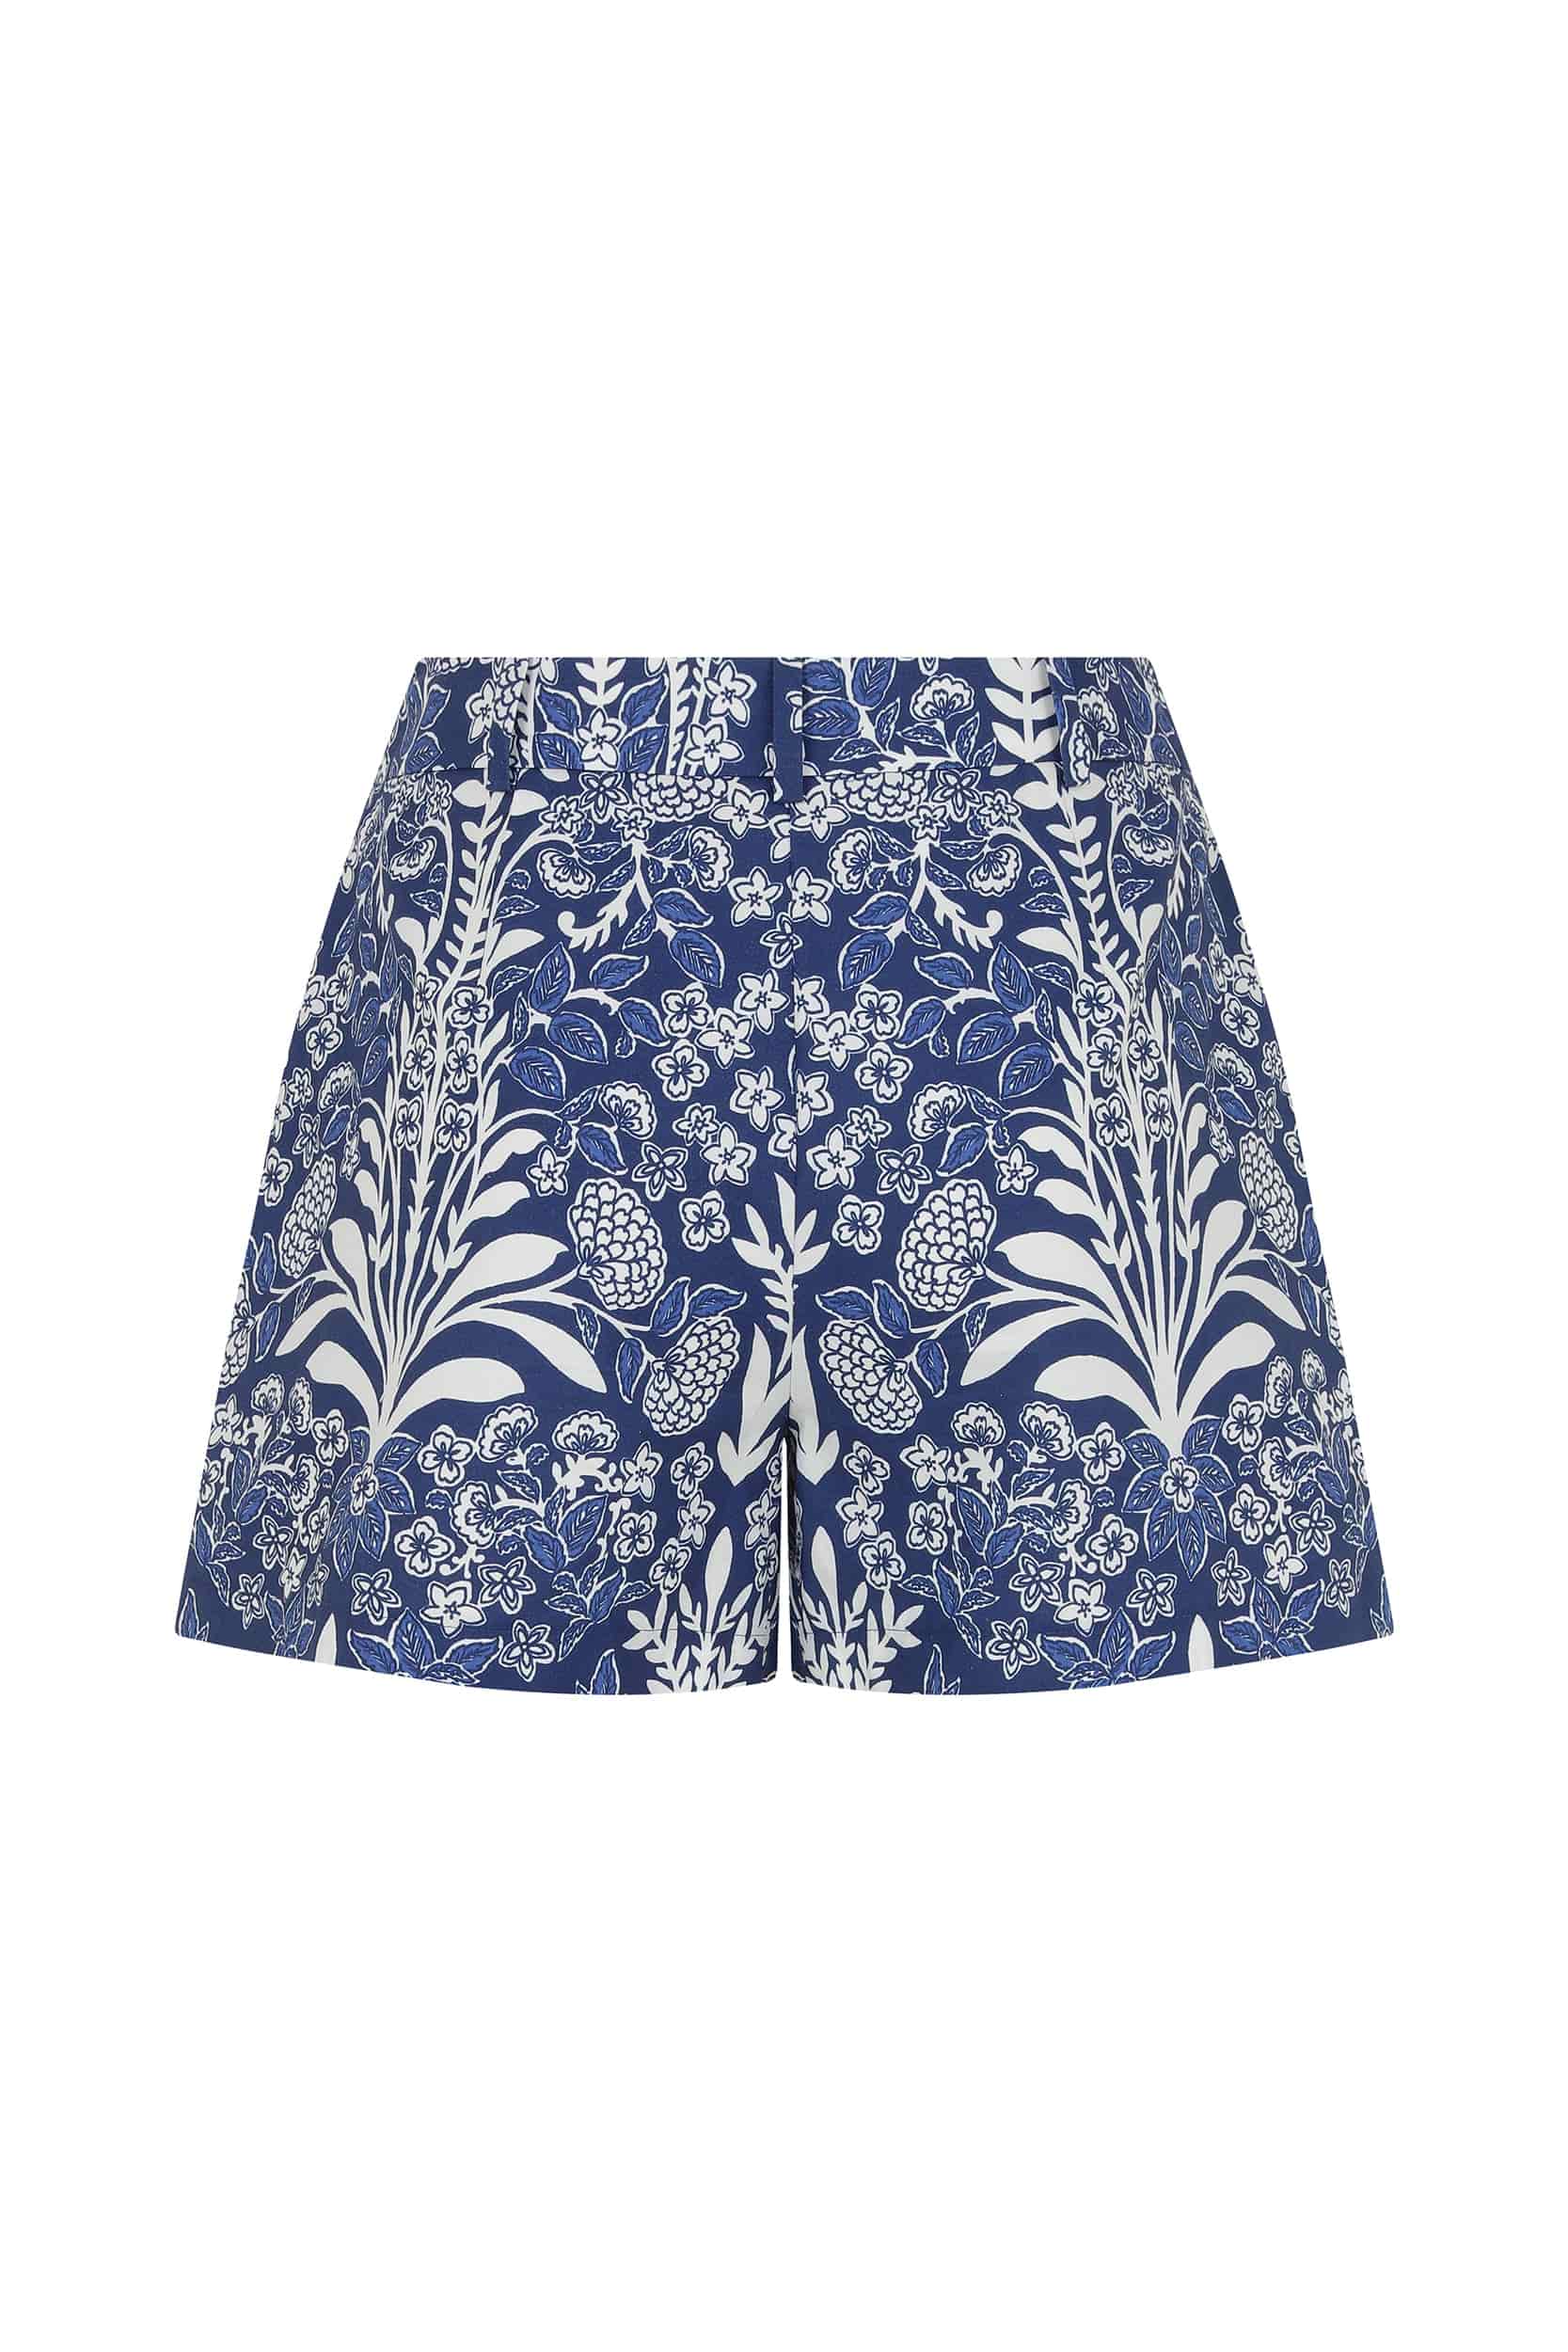 Blue White Floral Shorts -- [ORIGINAL]